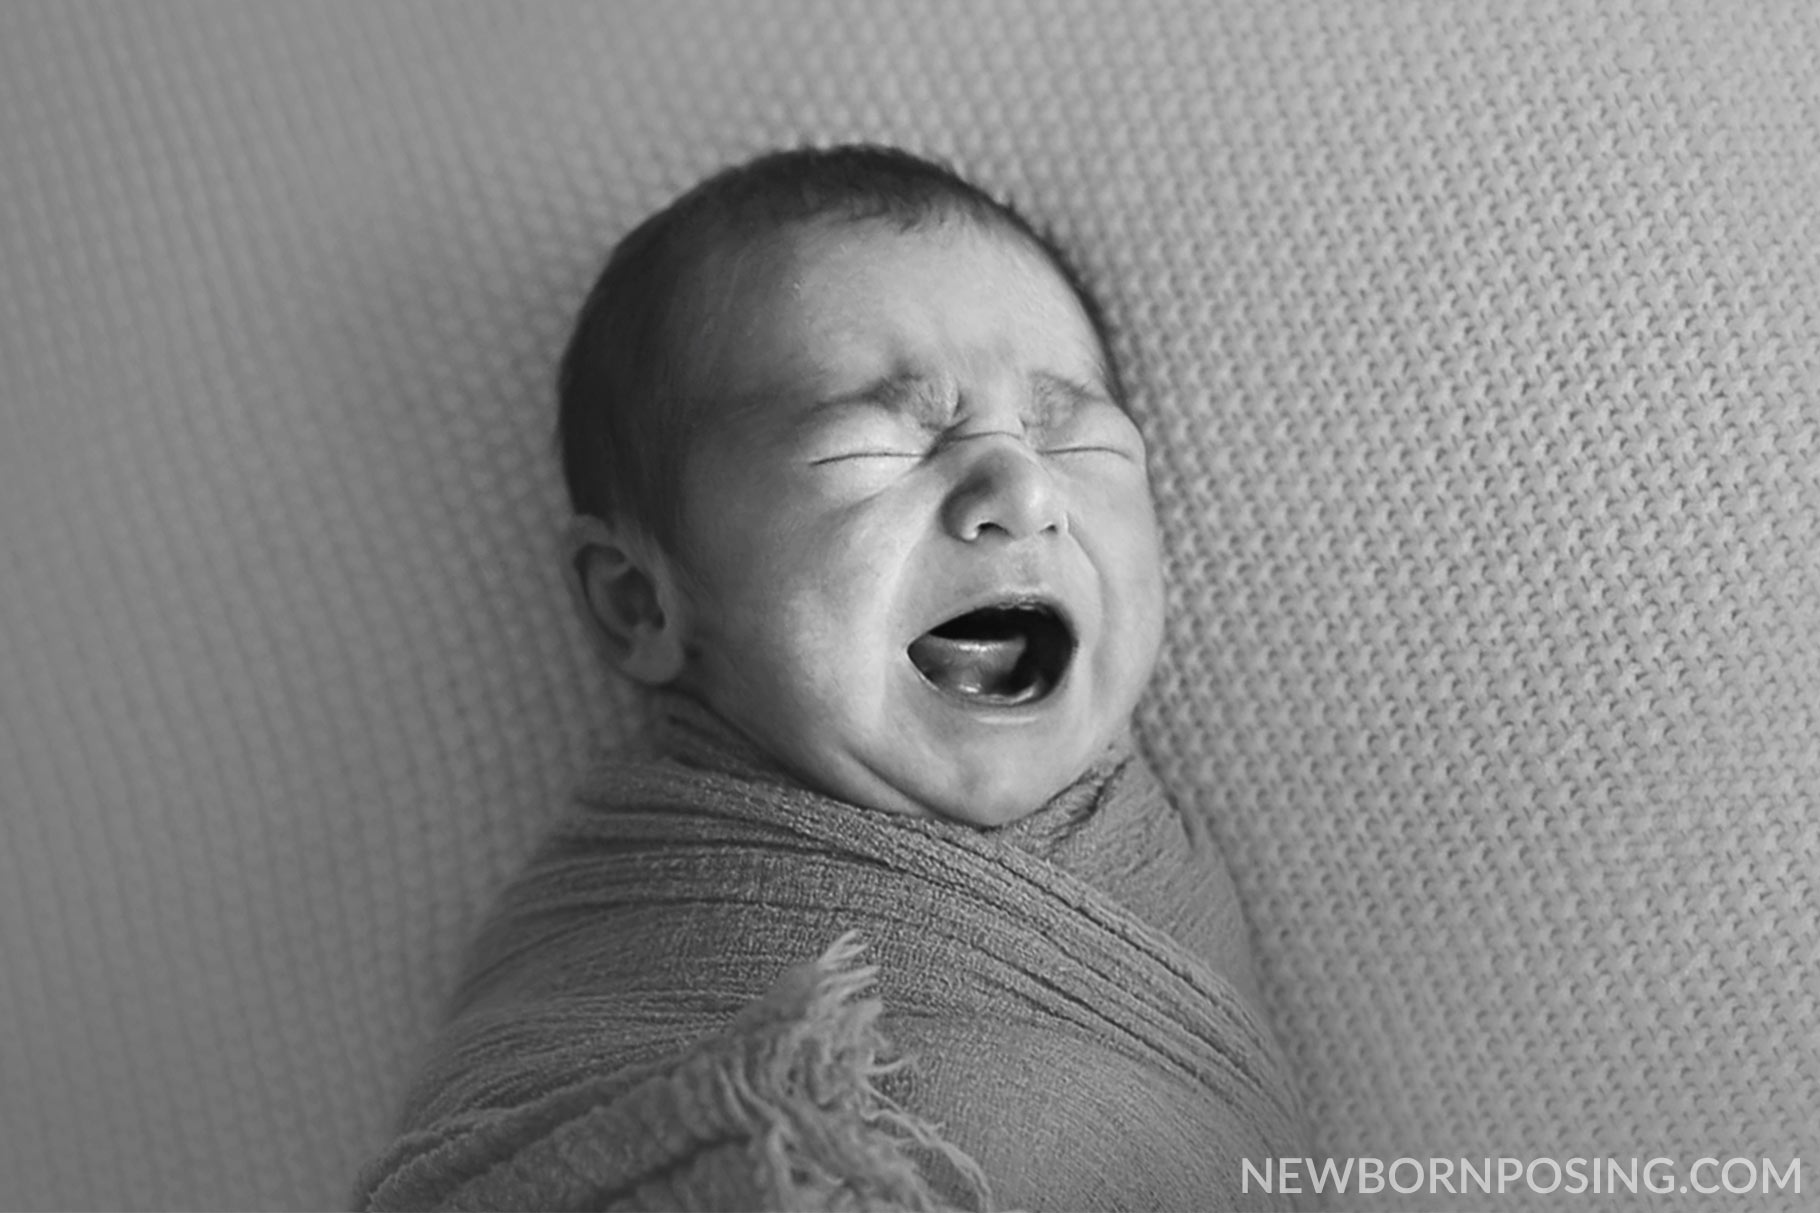 understanding newborn posing, image shows crying baby,